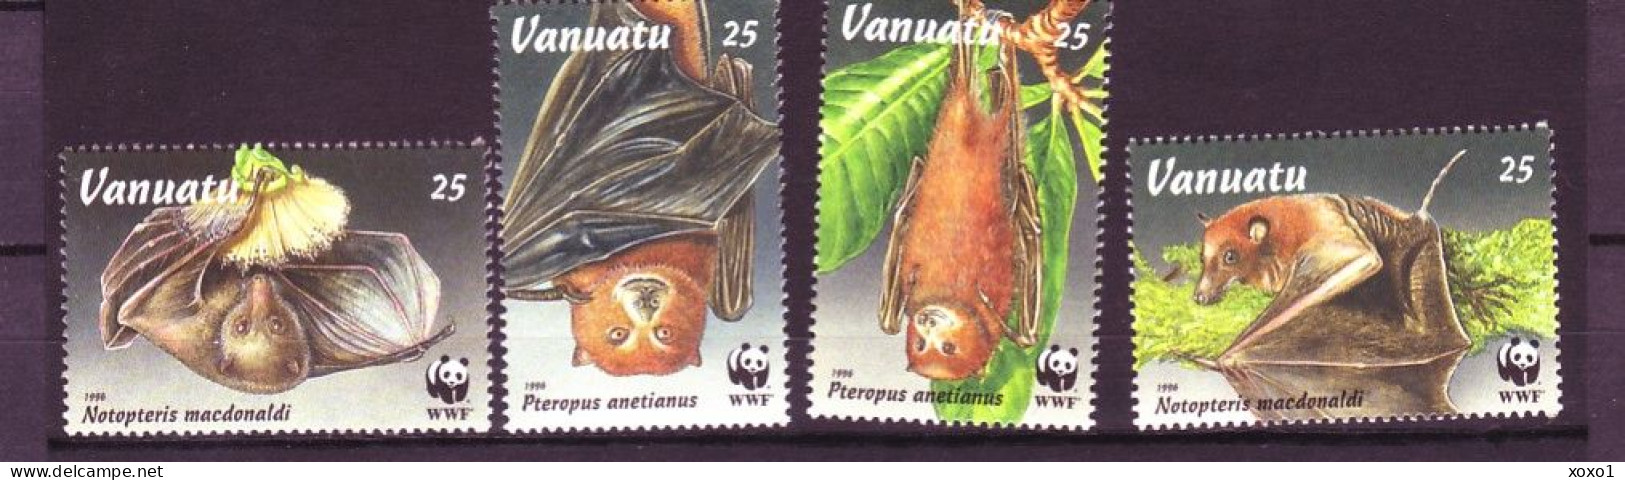 Vanuatu 1996 MiNr. 1004 - 1009 WWF Mammals Bats Insular Flying Fox, Fijian Blossom Bat  4v  MNH** 3.60 € - Chauve-souris